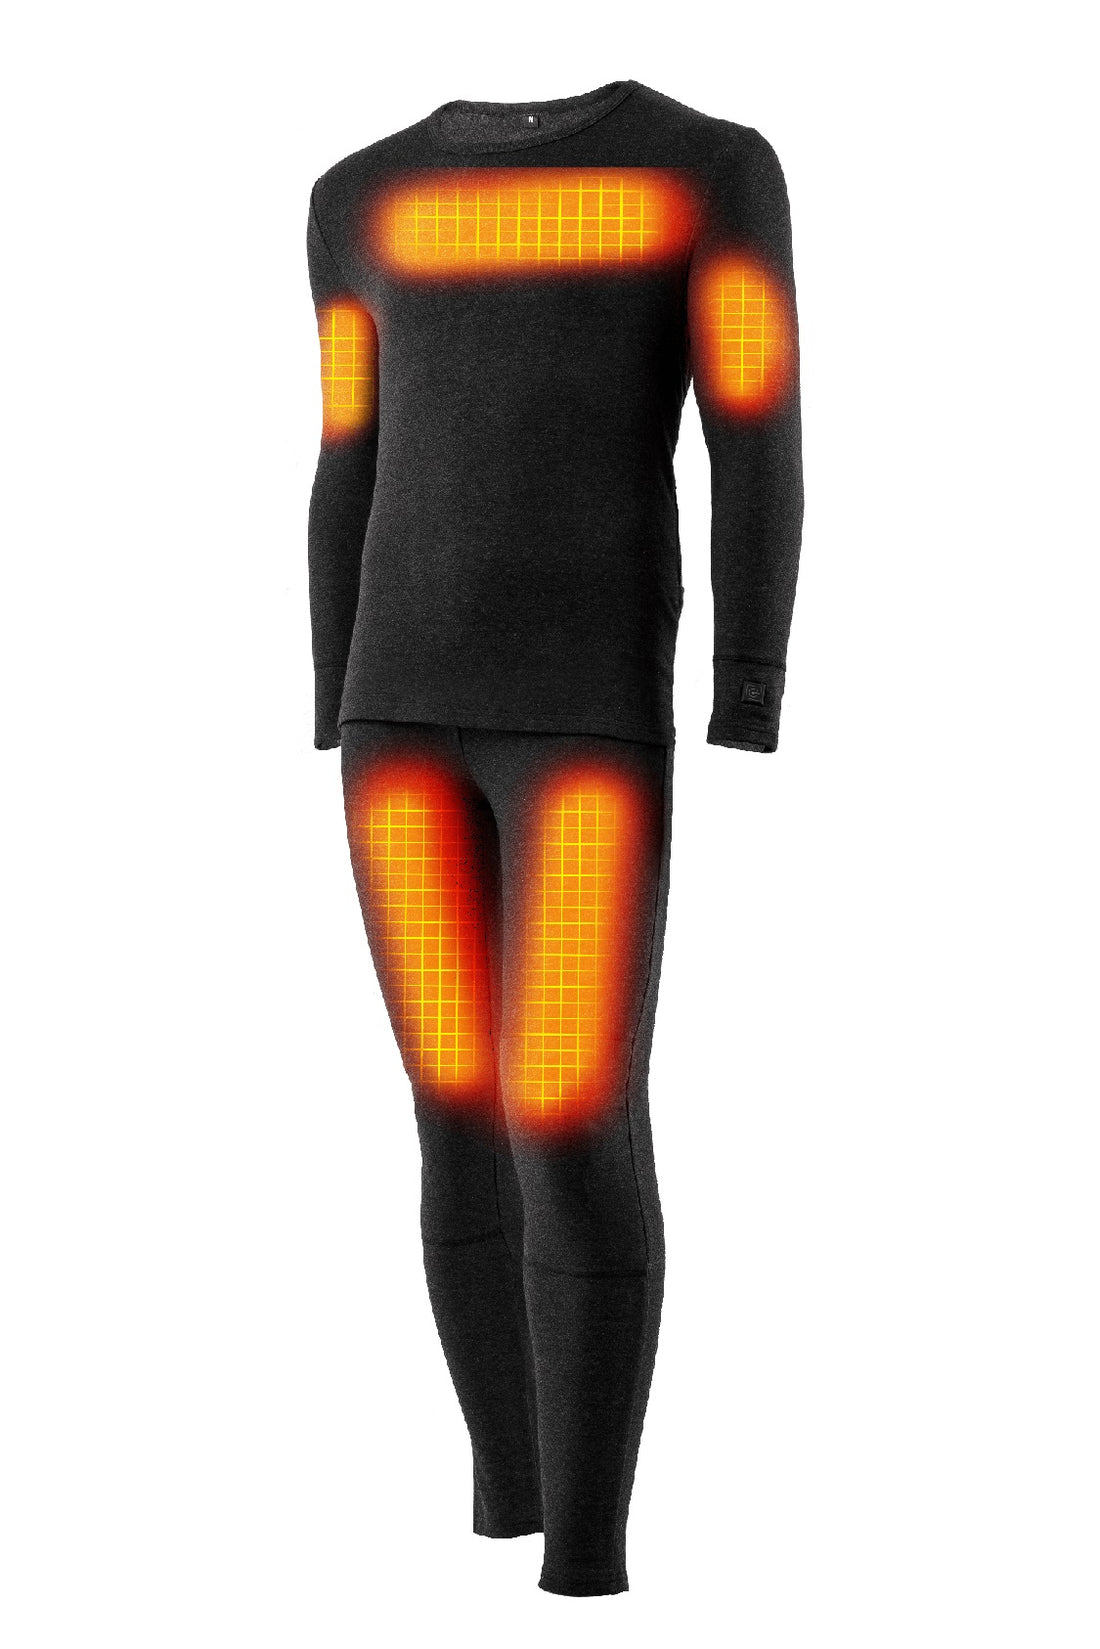 Men Women Winter Heated Underwear Suit USB Electric Power Heating Warm Tops  Pant